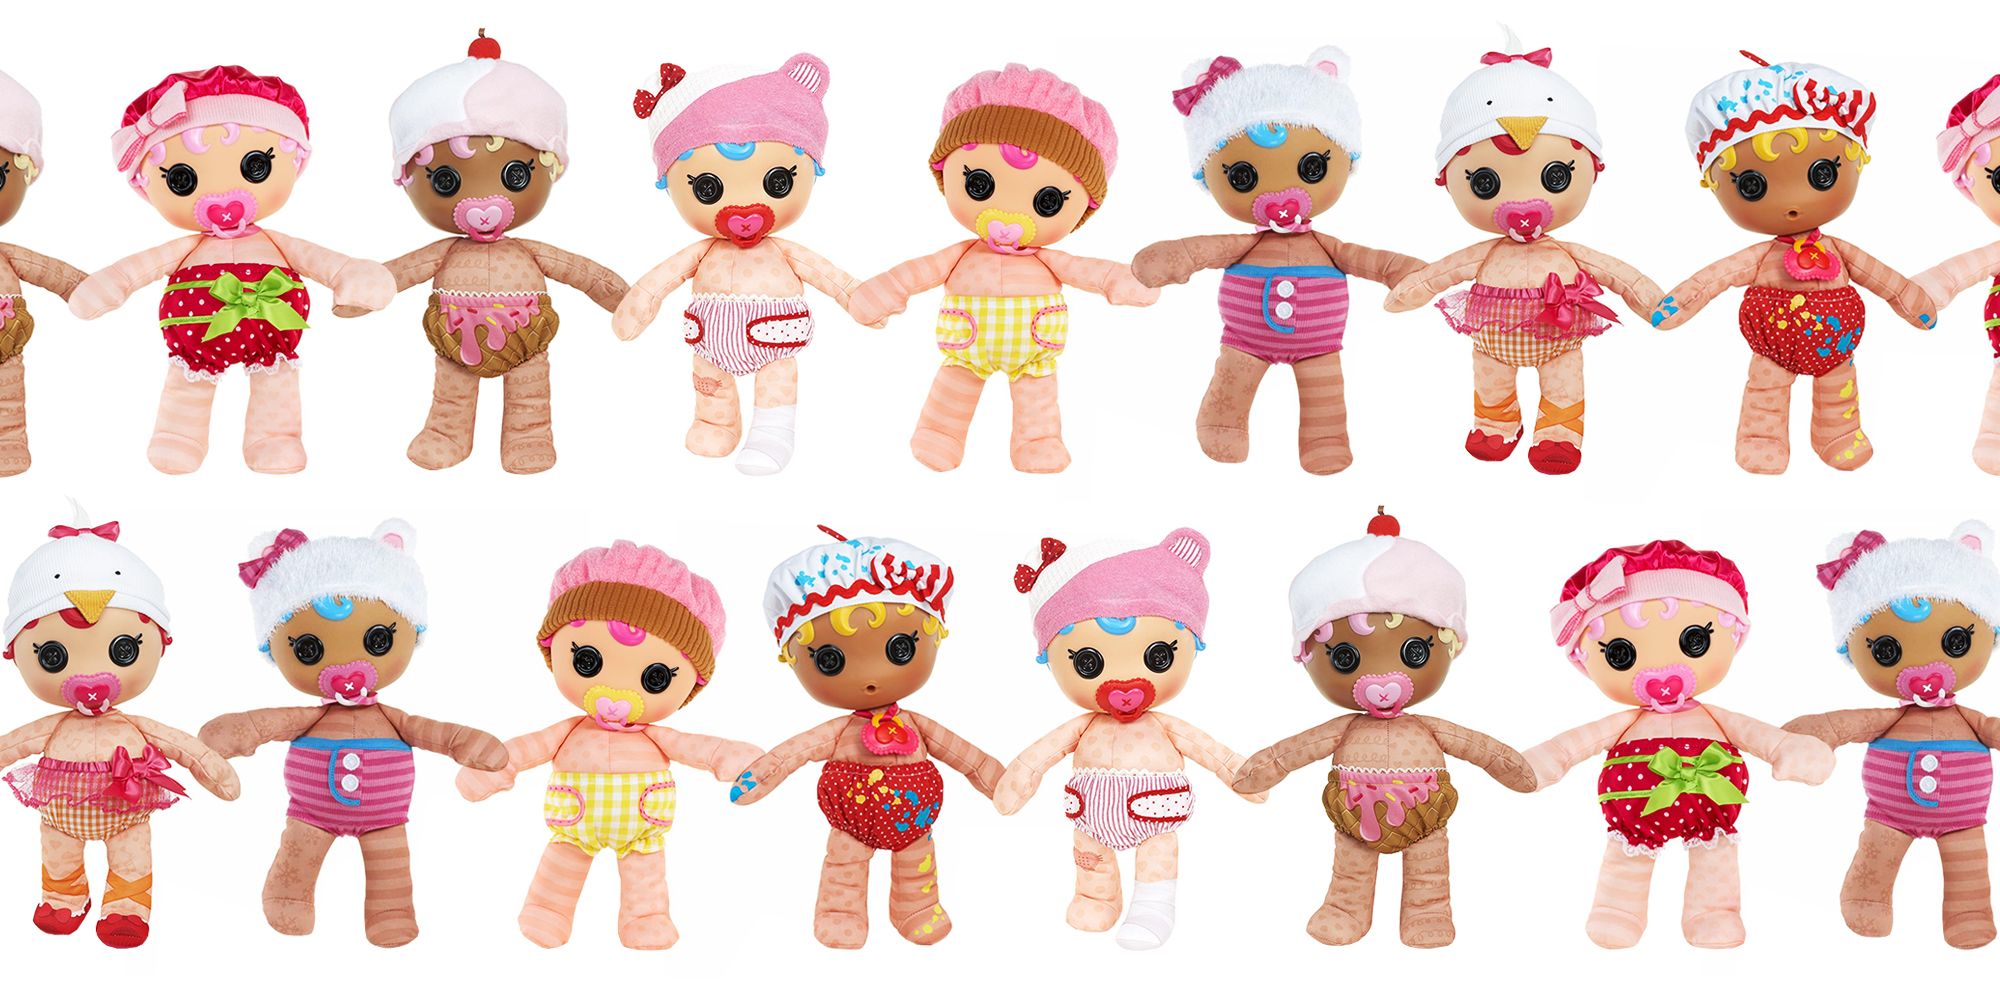 soft rag dolls for babies